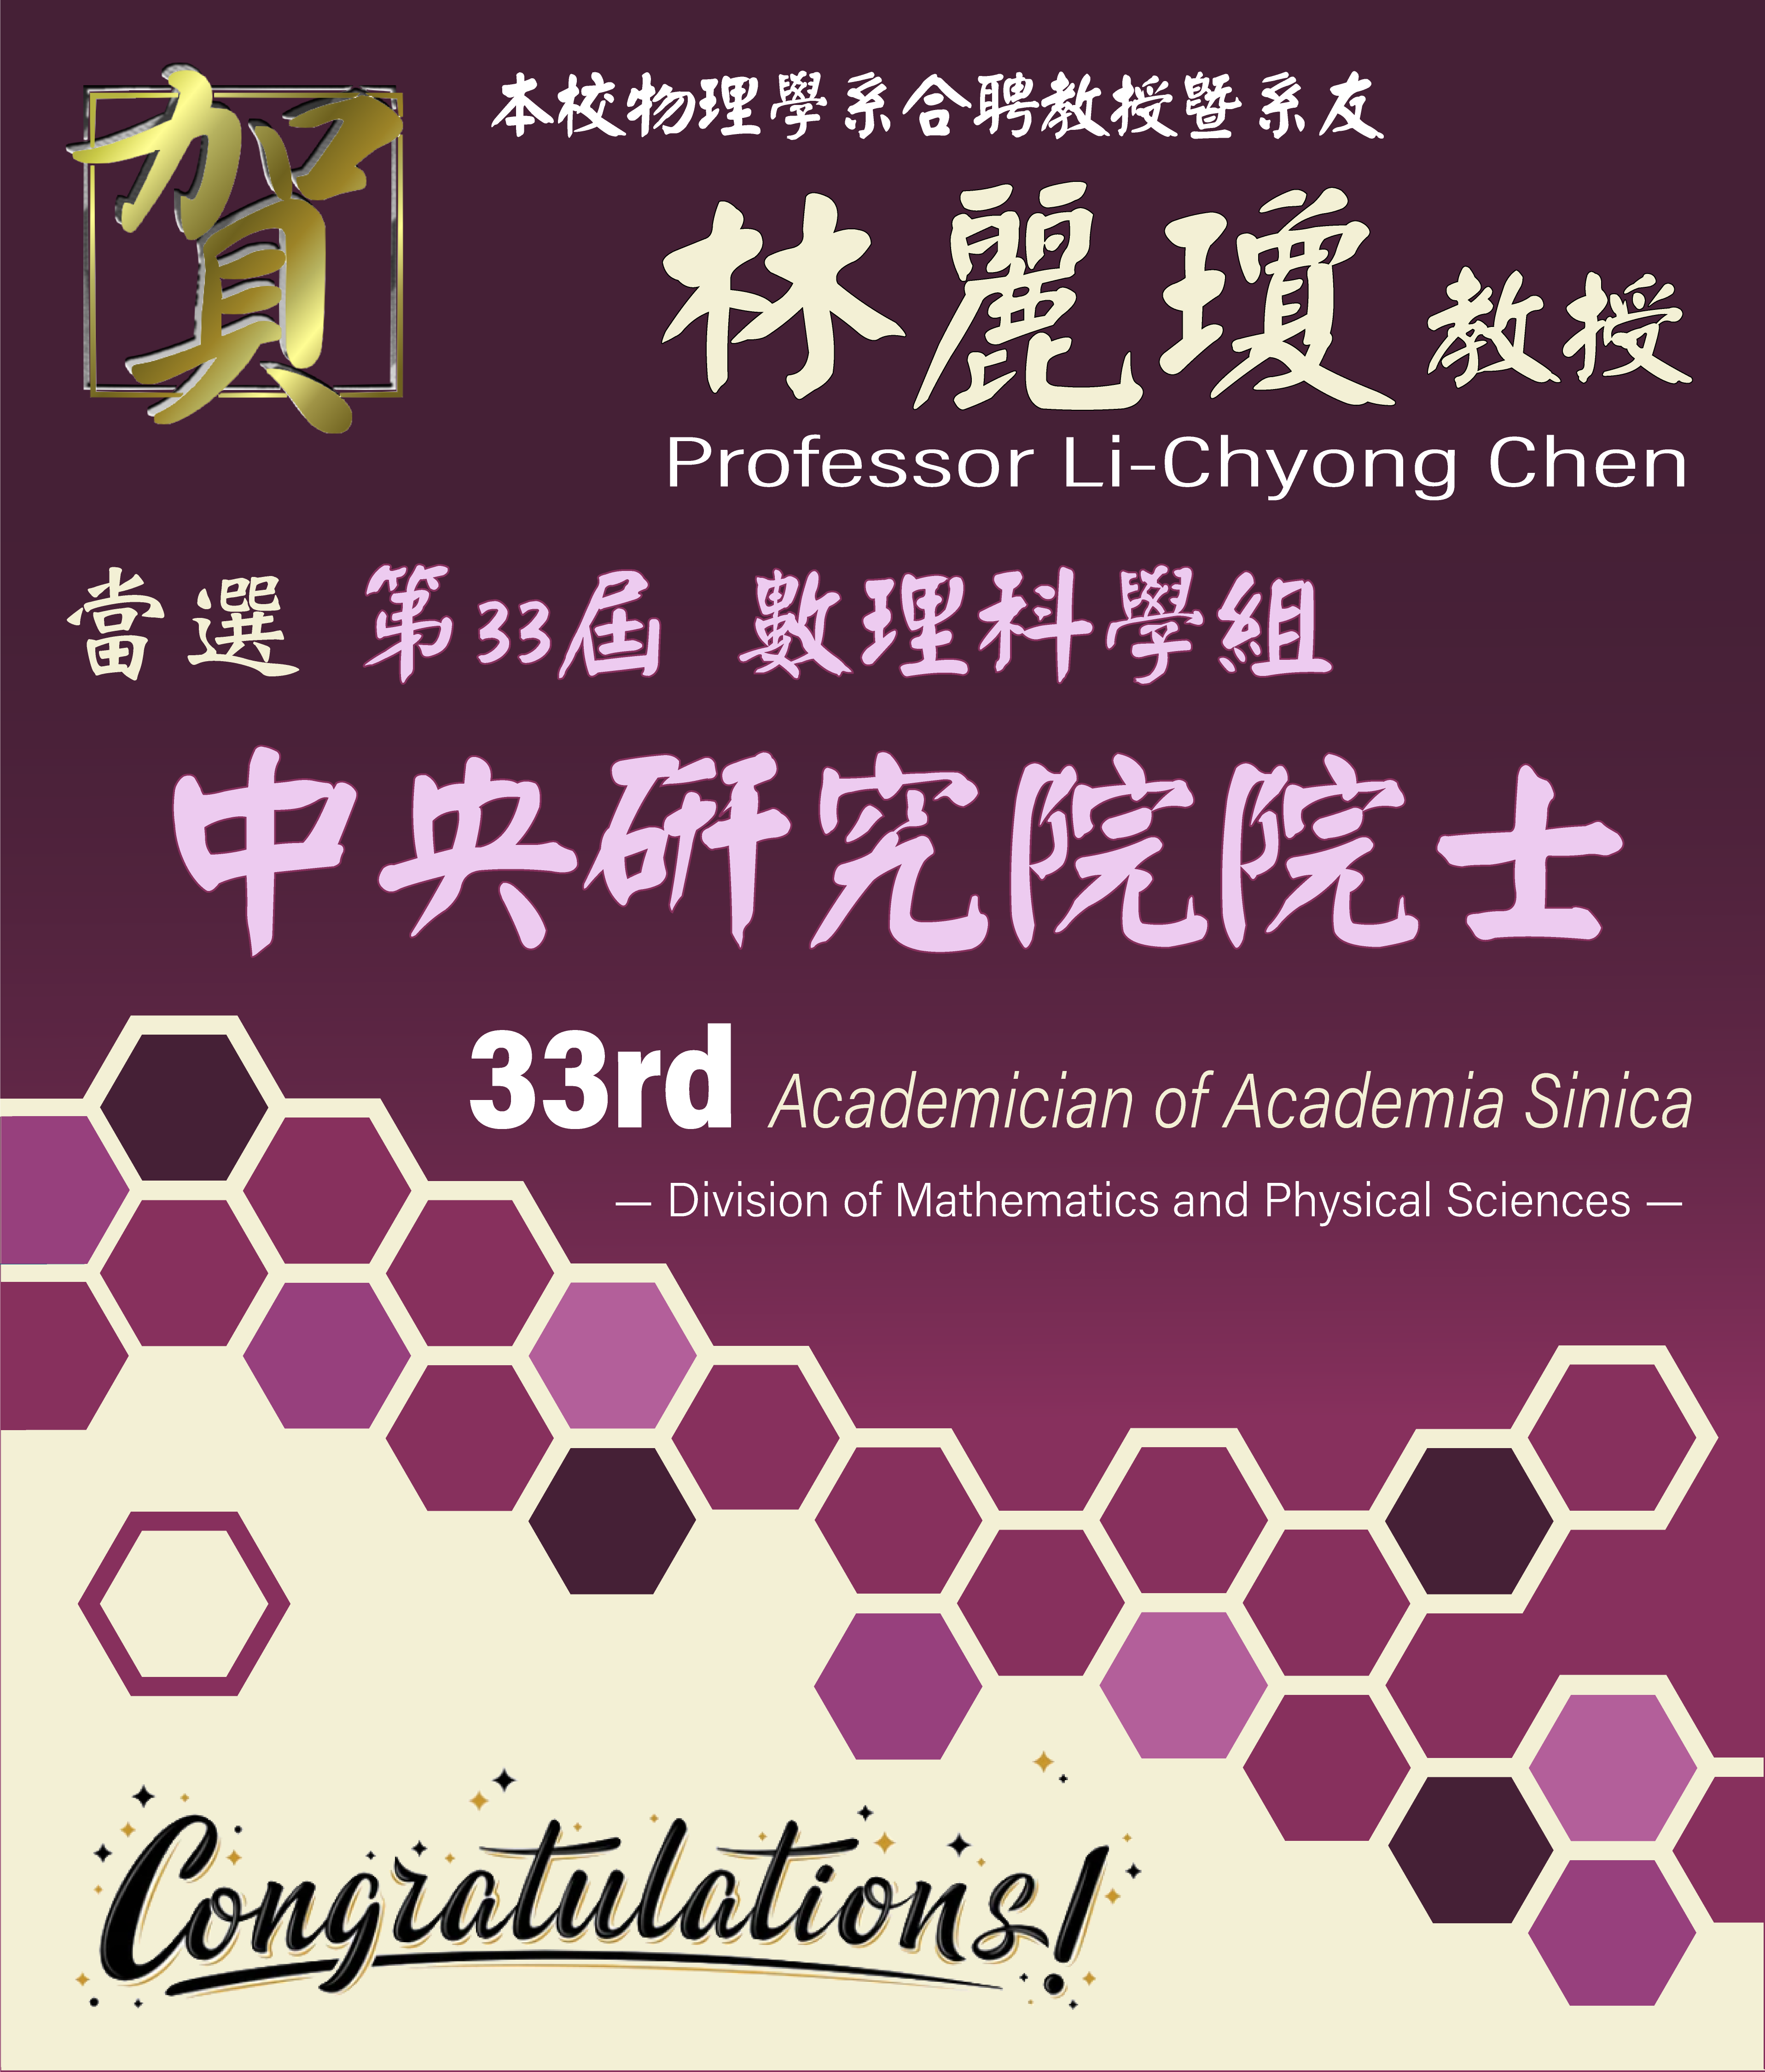 《賀》本系 合聘教授暨系友 Prof. Li-Chyong Chen 當選 第33屆數理科學組 《中央研究院院士》 (33rd Academician of Academia Sinica - Division of Mathematics and Physical Sciences)